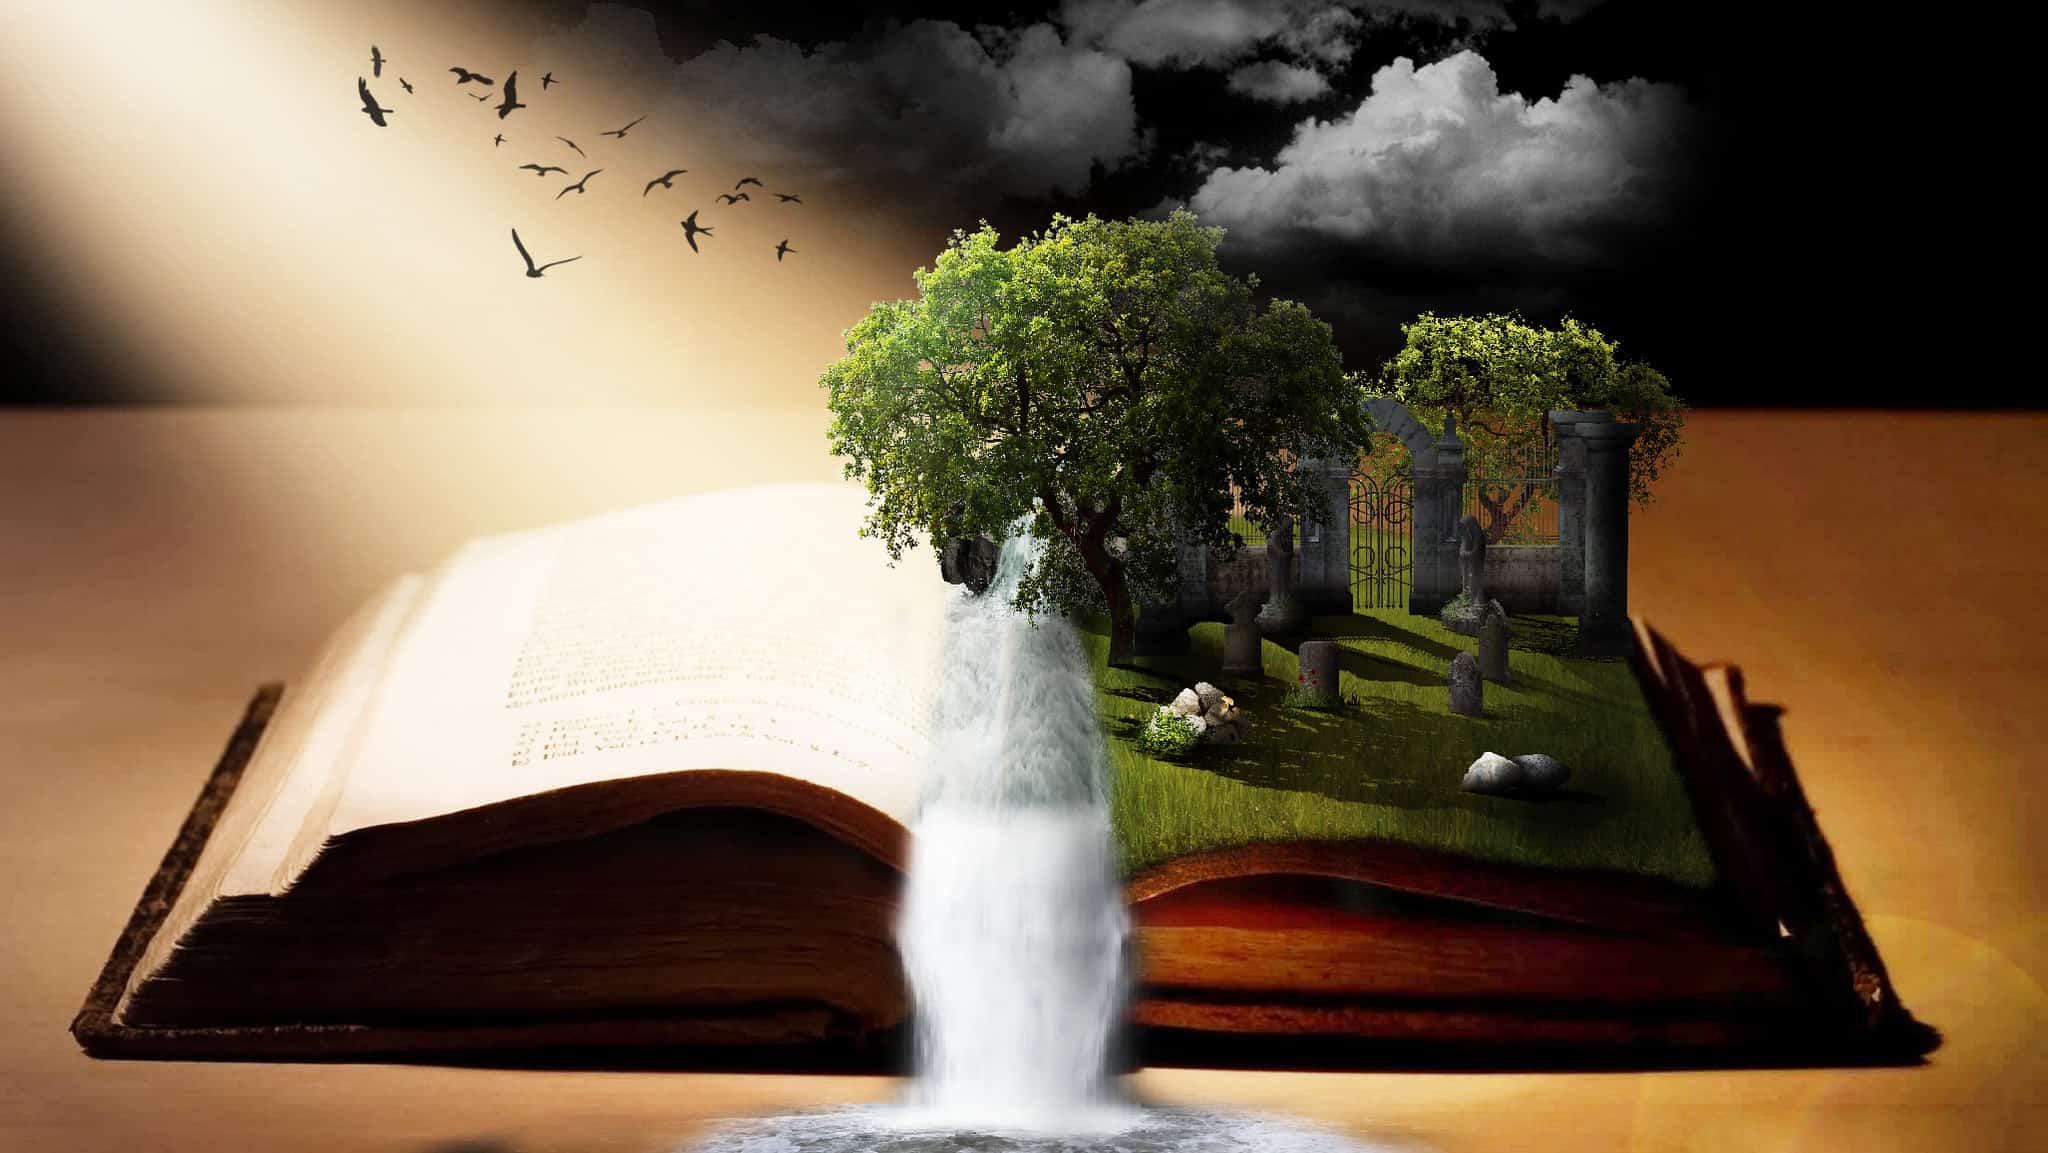 Fantasy Literature, Imagination, and Christian Life